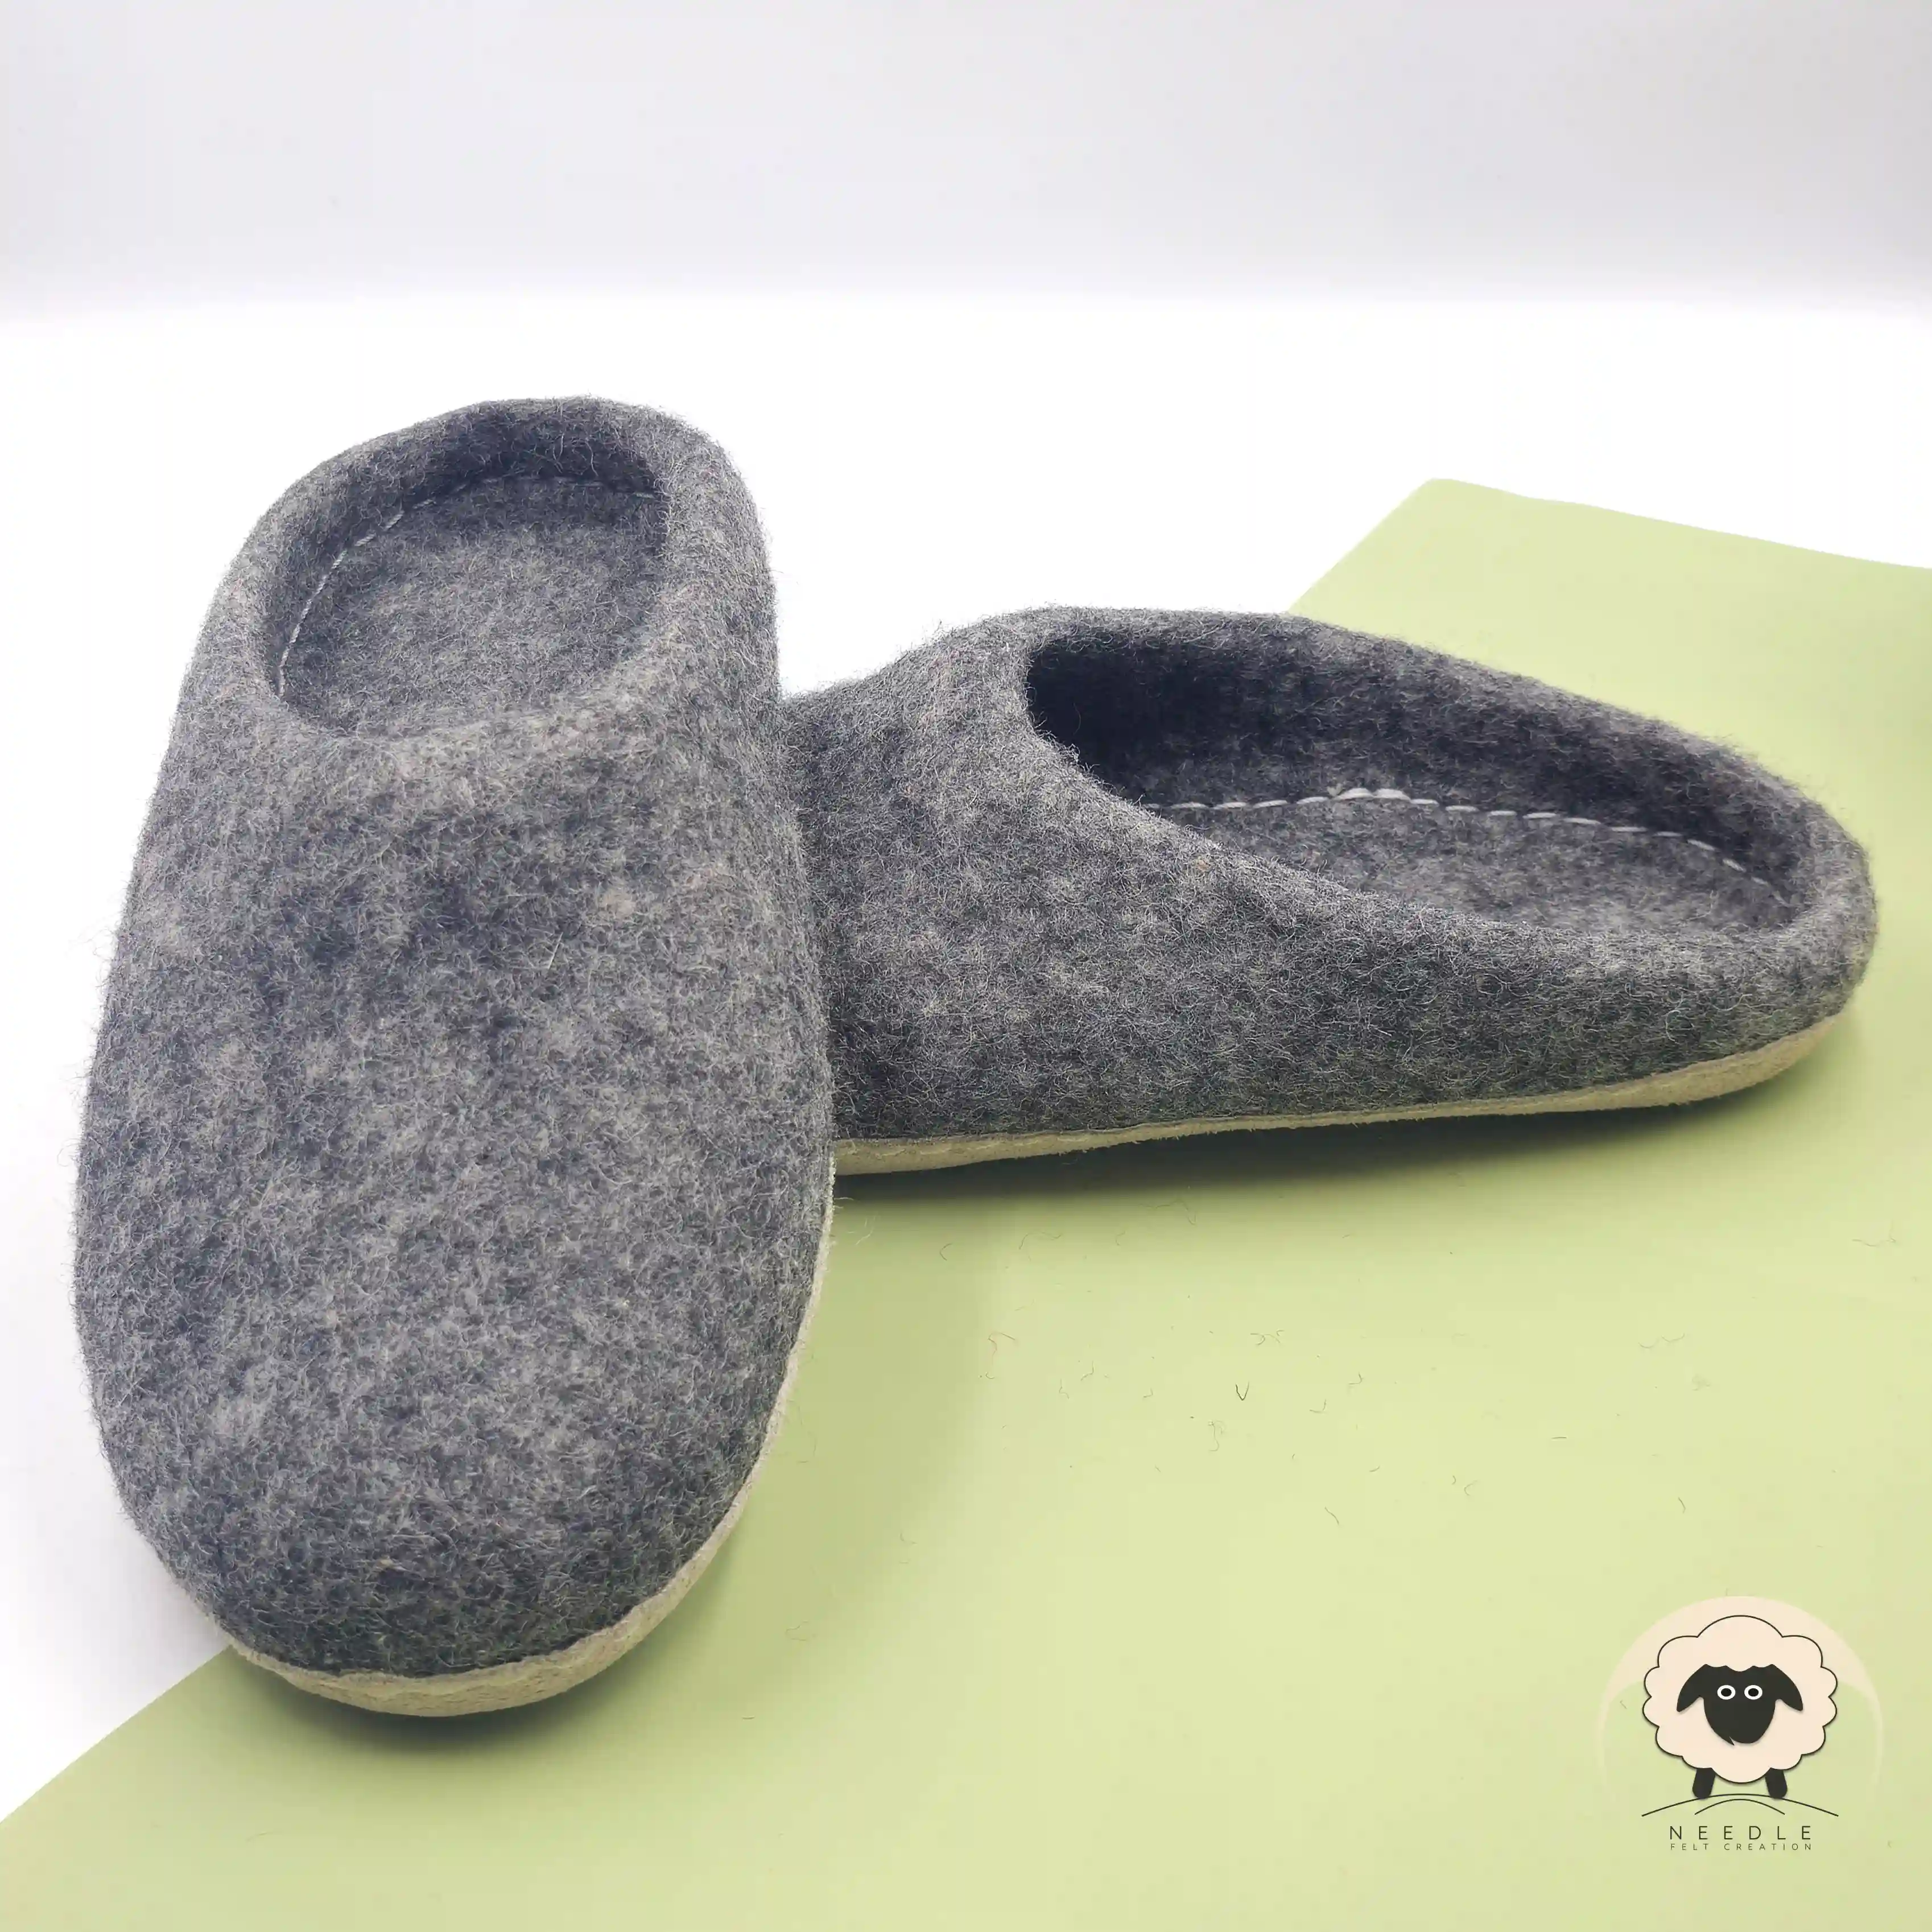 Black Felt Slippers | Handmade Felted Wool Slippers - Needle Felt Creation